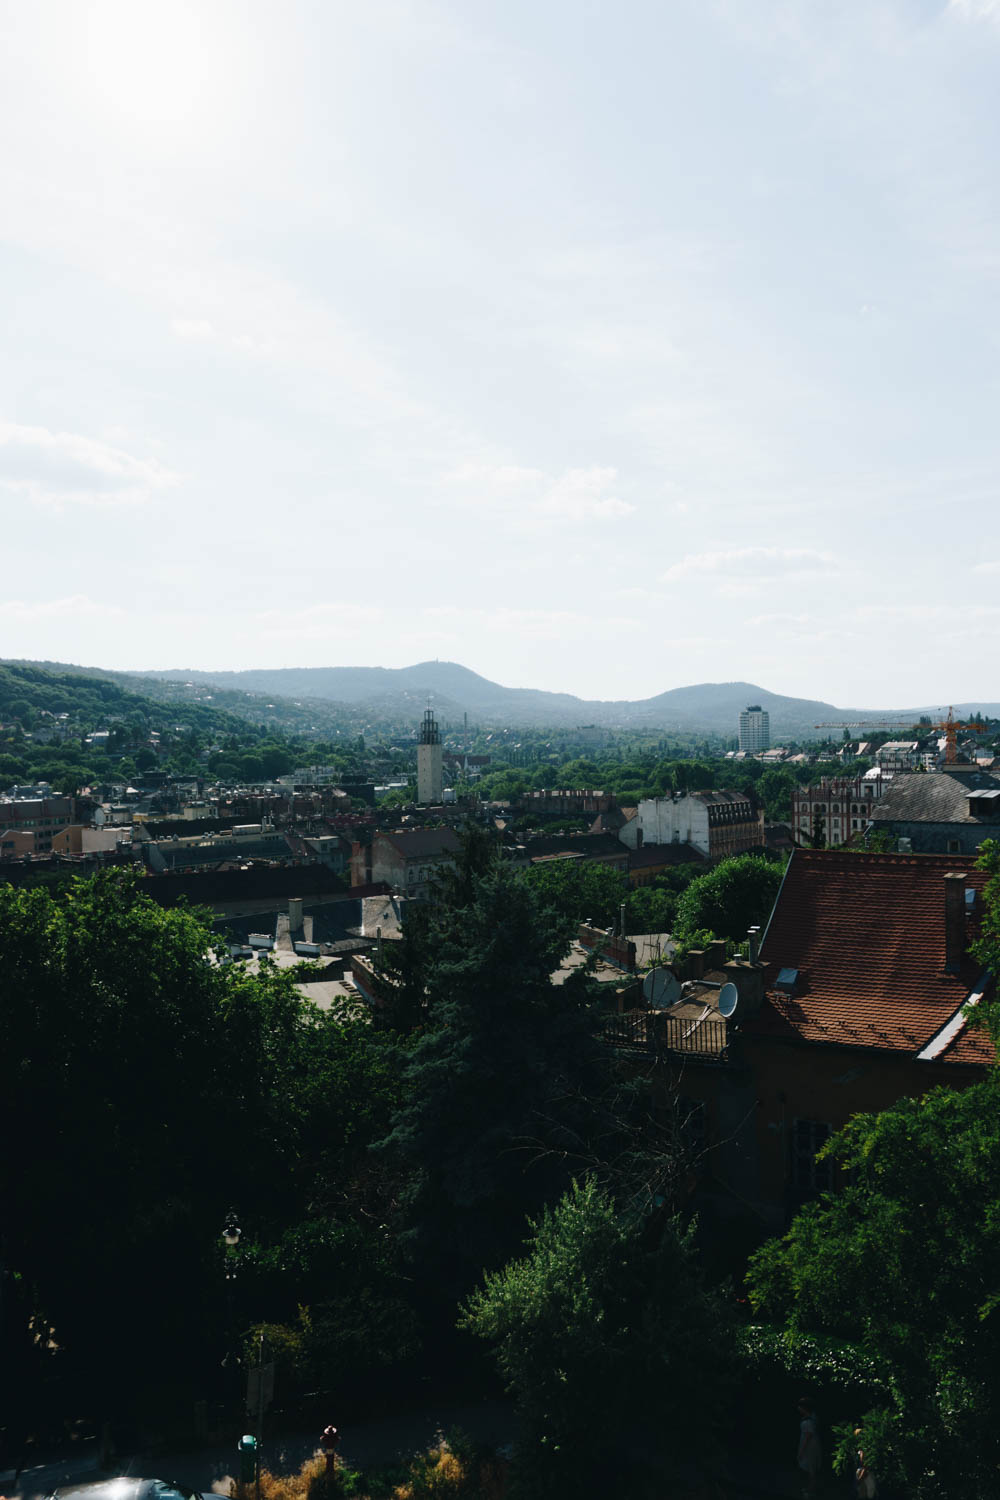 Budapest Hungary / Travel Guide / Buda Castle Hill / RG Daily Blog /